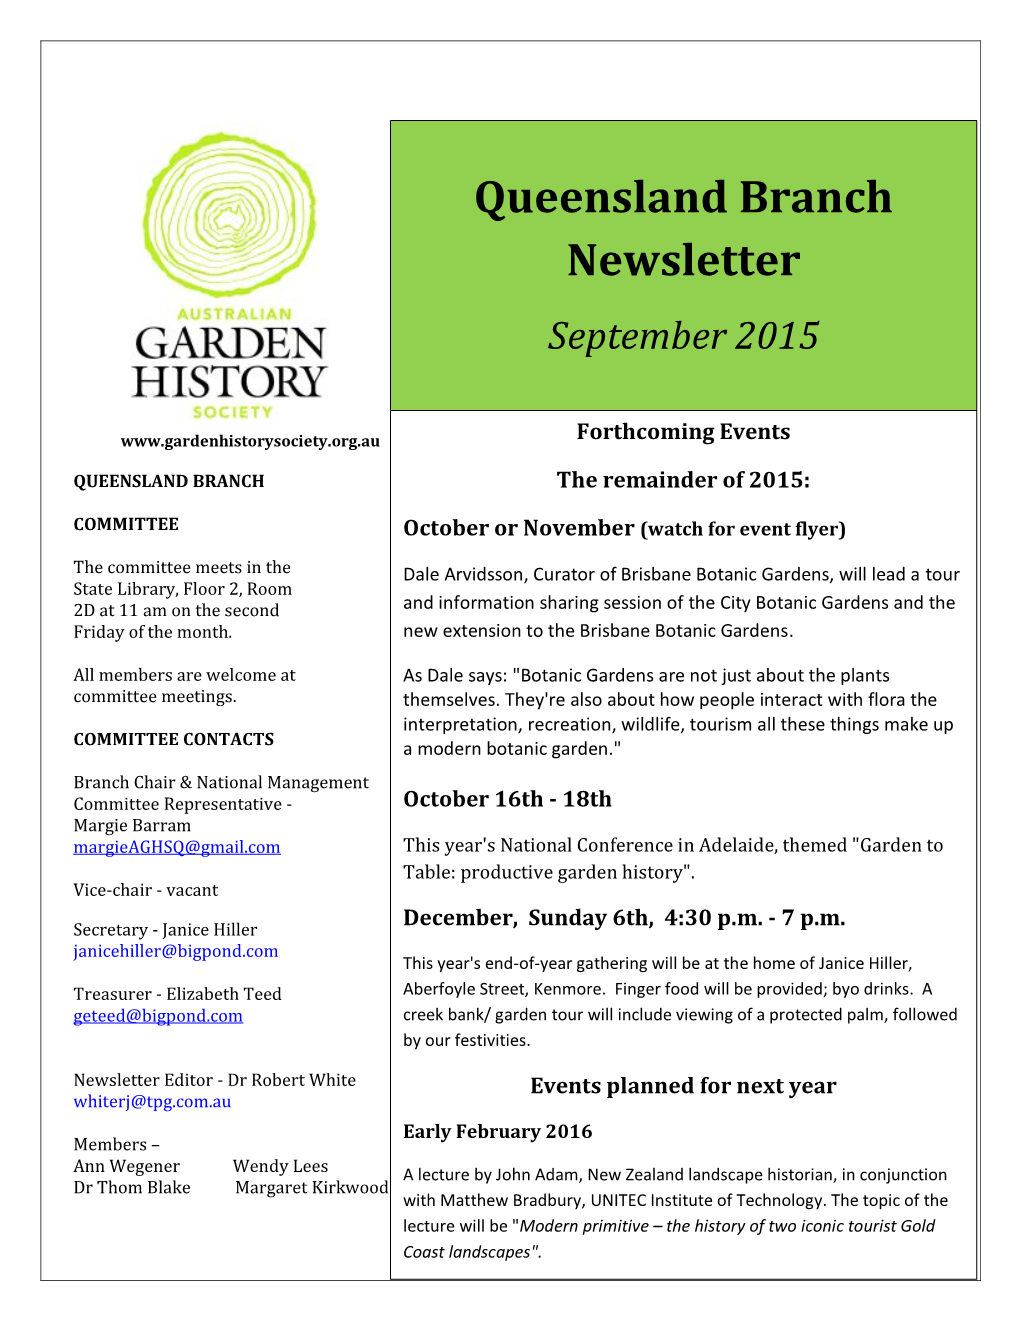 Queensland Branch Newsletter September 2015